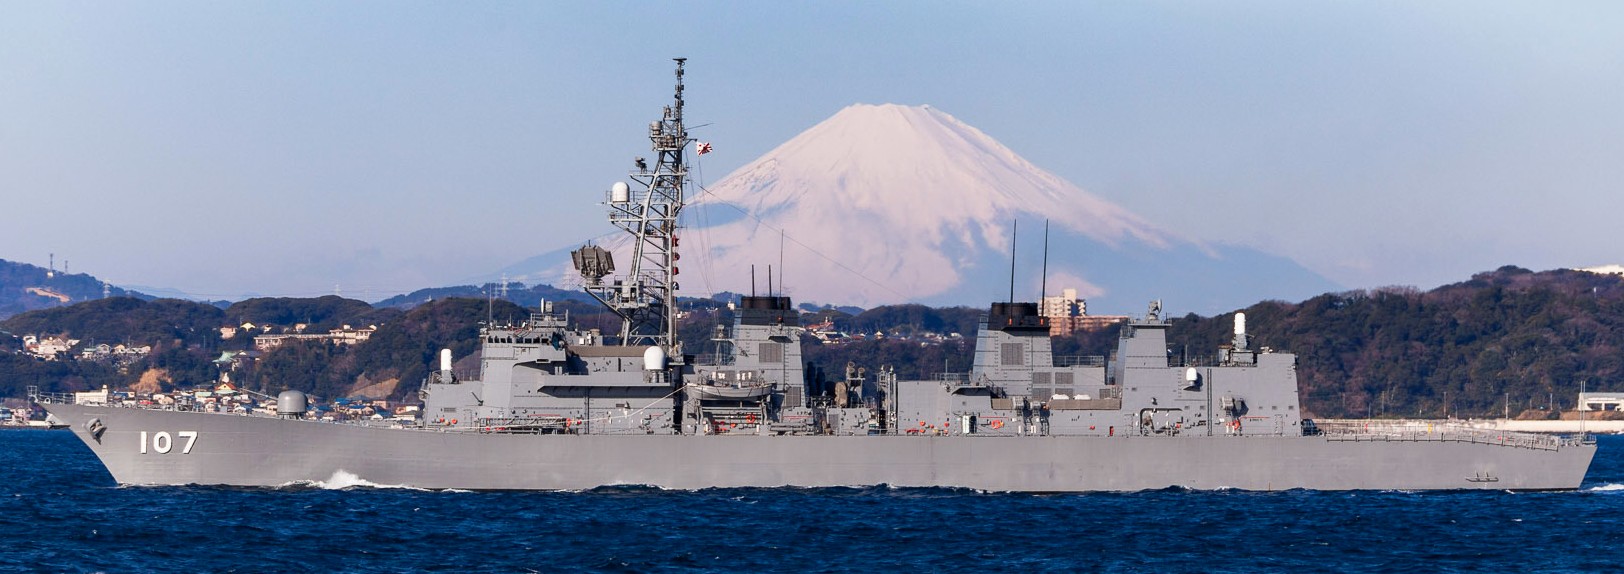 dd-107 js ikazuchi murasame class destroyer japan maritime self defense force jmsdf 11